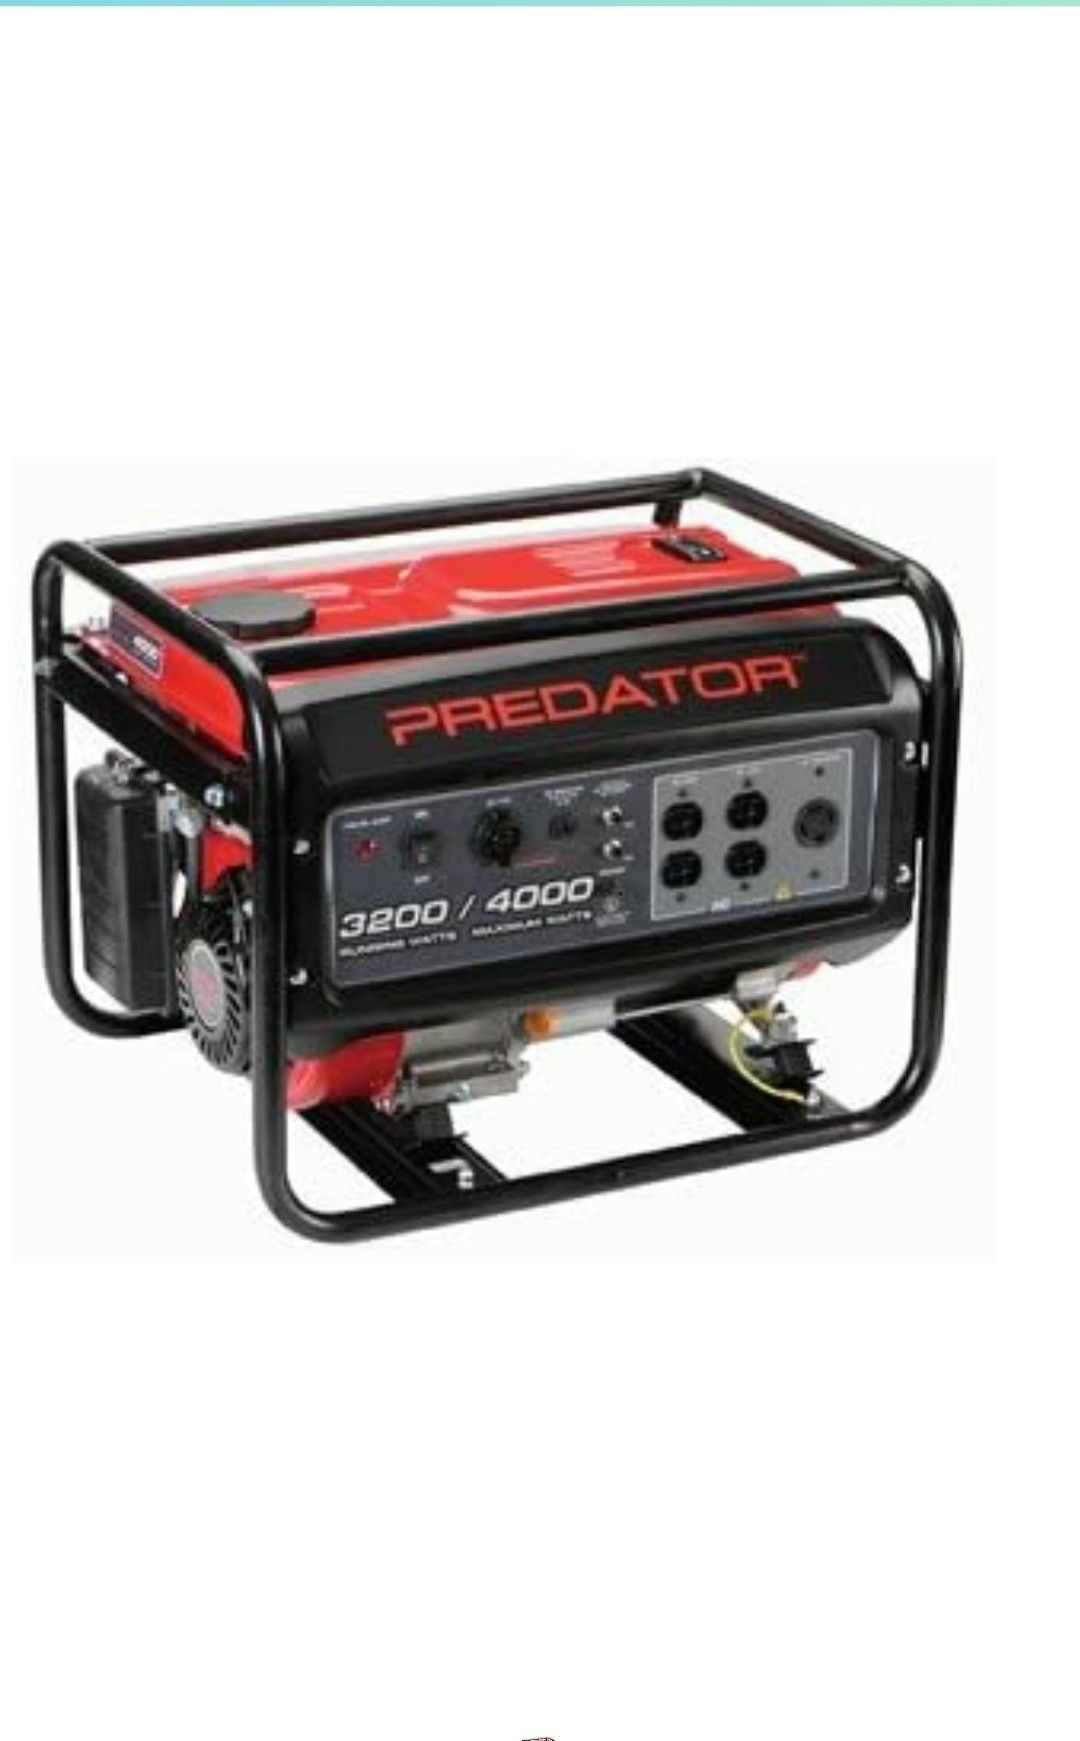 Predator portable generator 4000 watts